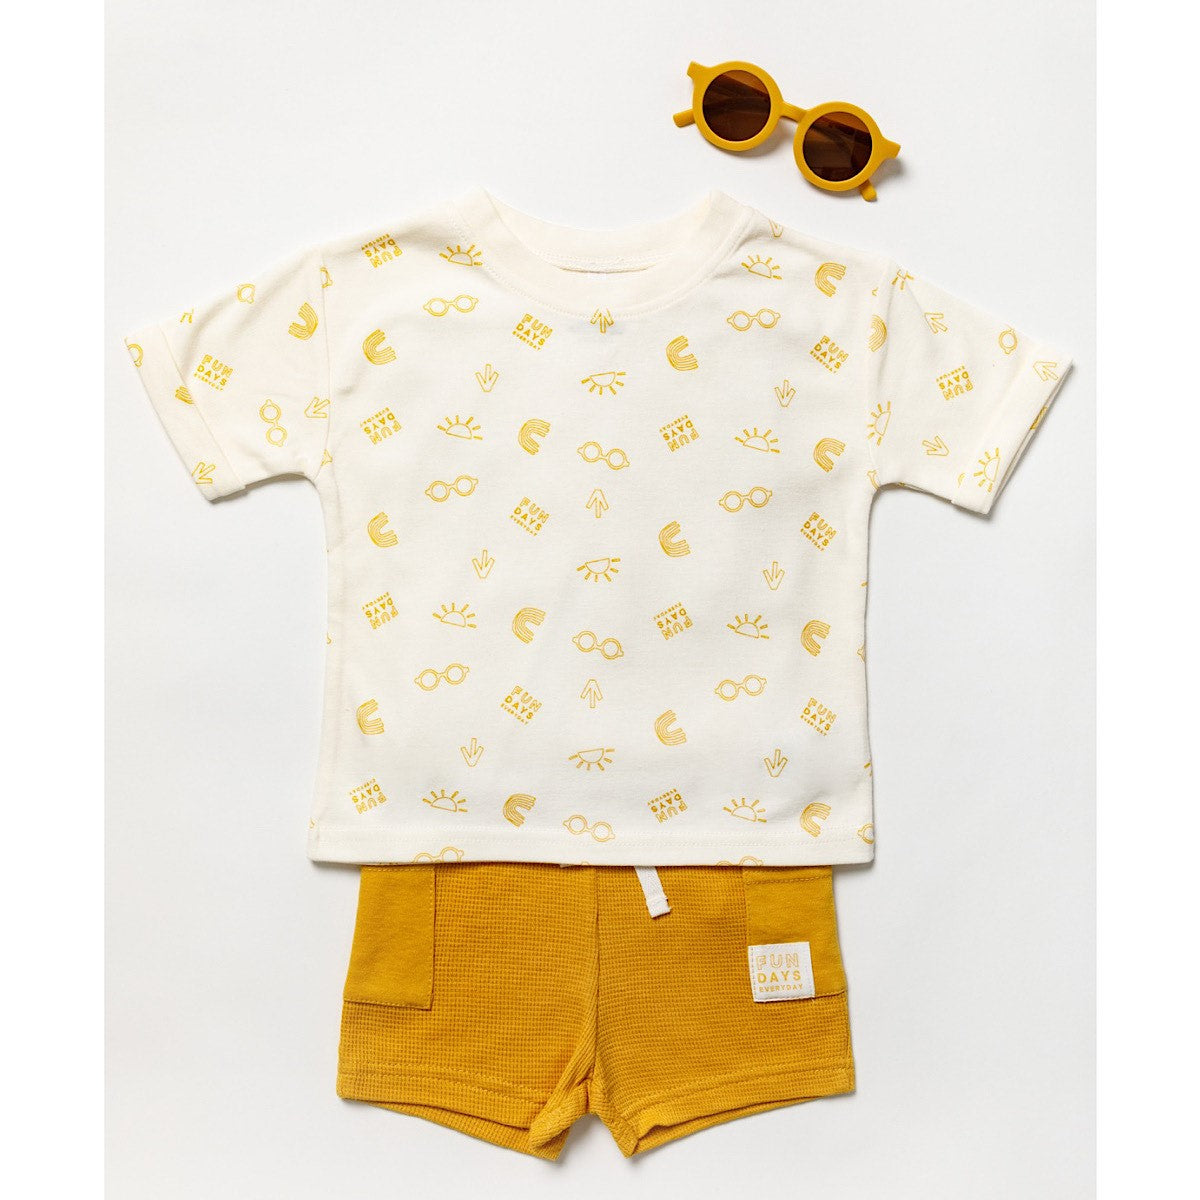 Summer Print Outfit & Sunglasses Set